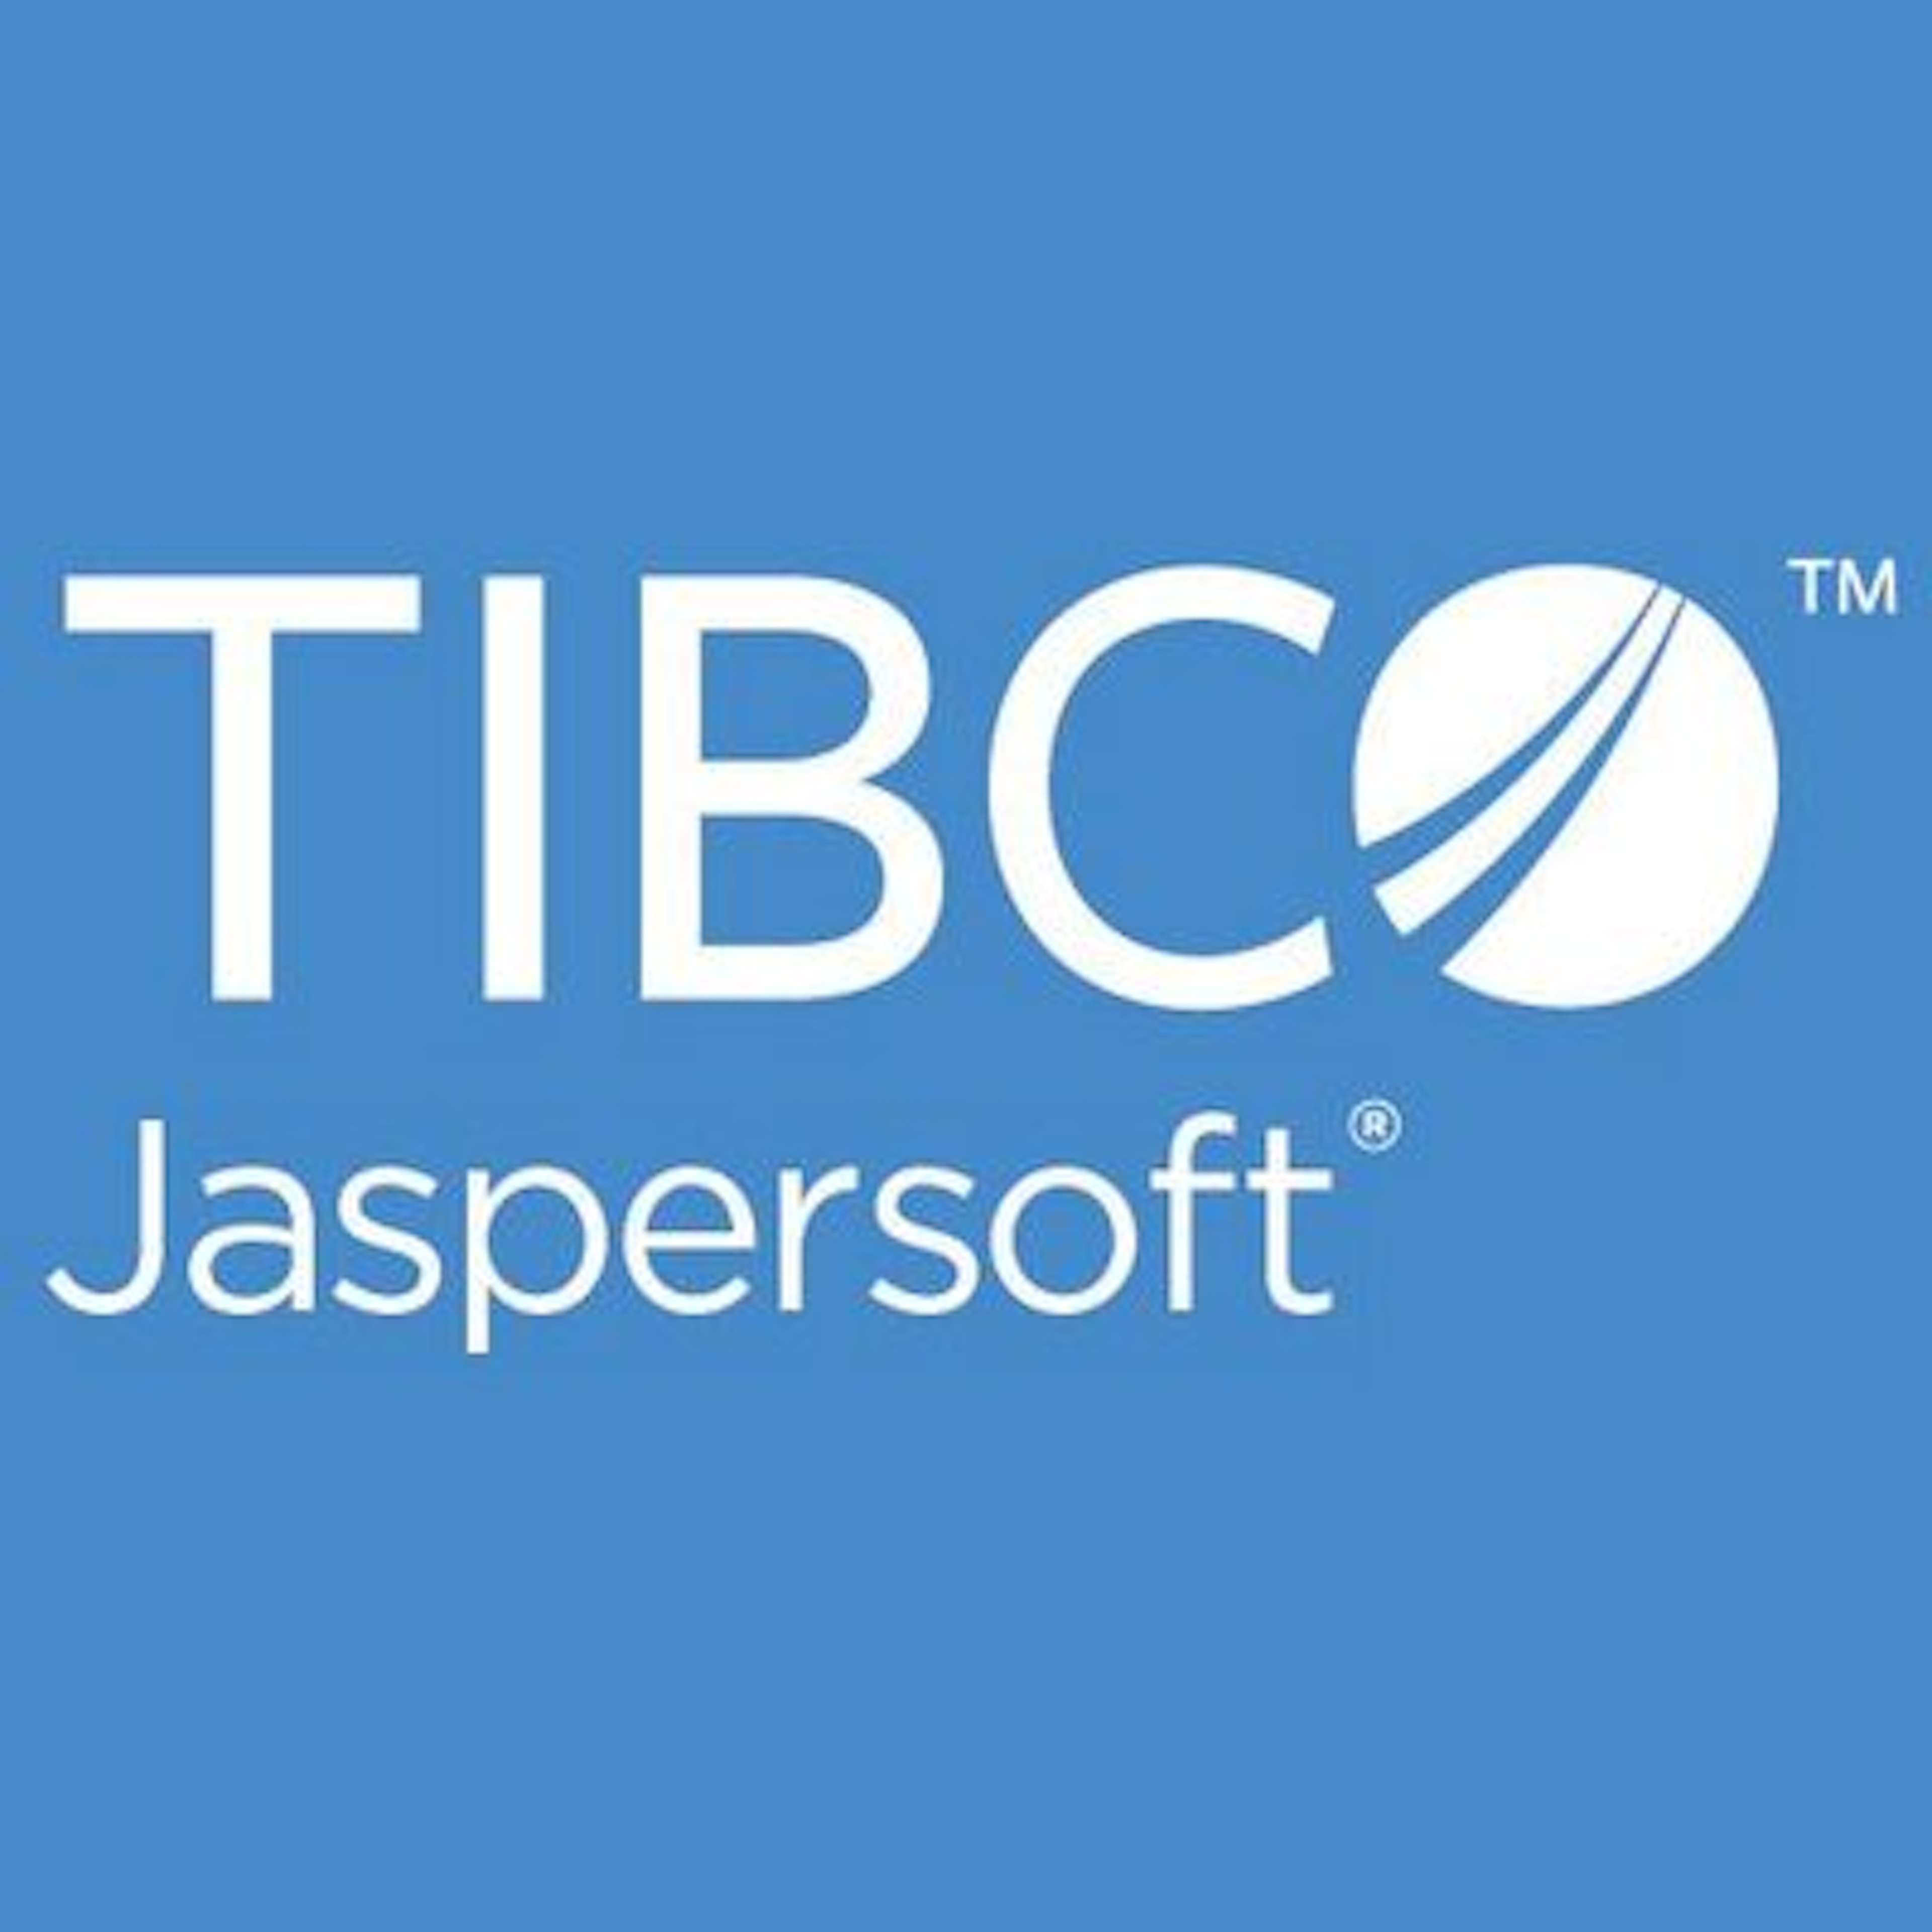 TIBCO Jaspersoft Logo